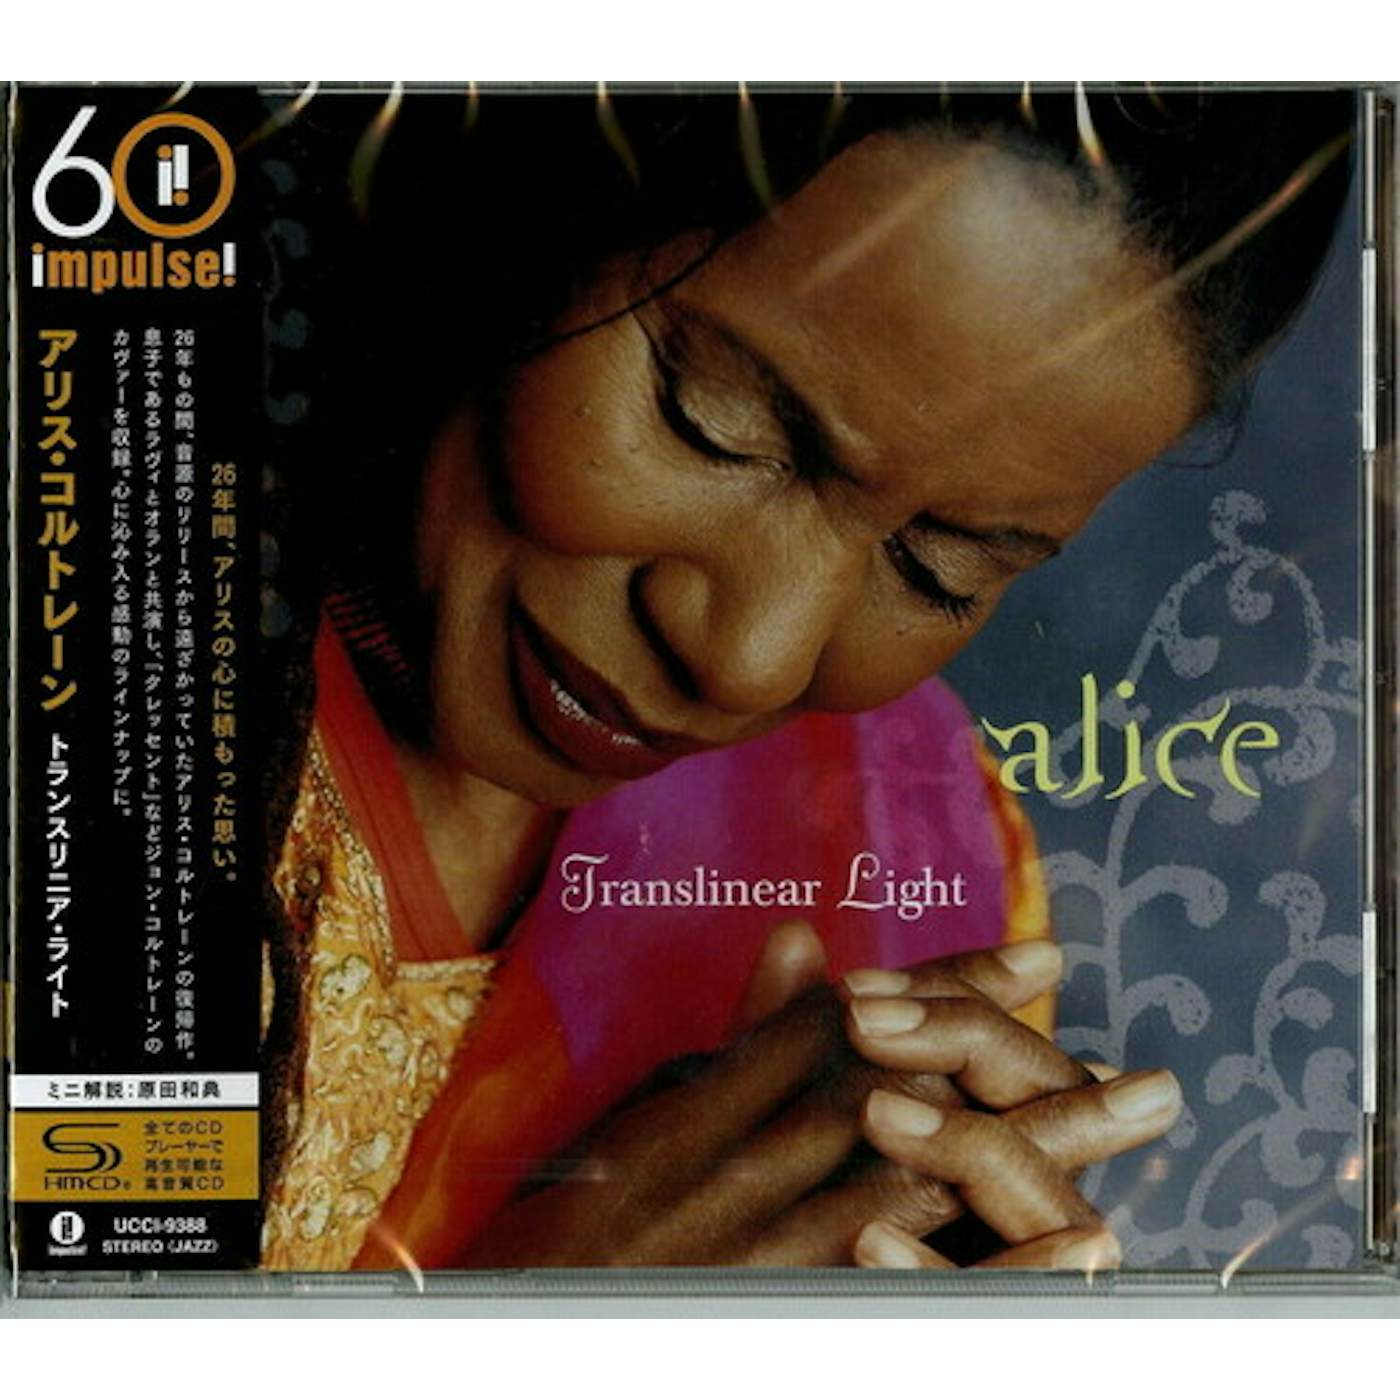 Alice Coltrane TRANSLINEAR LIGHT CD